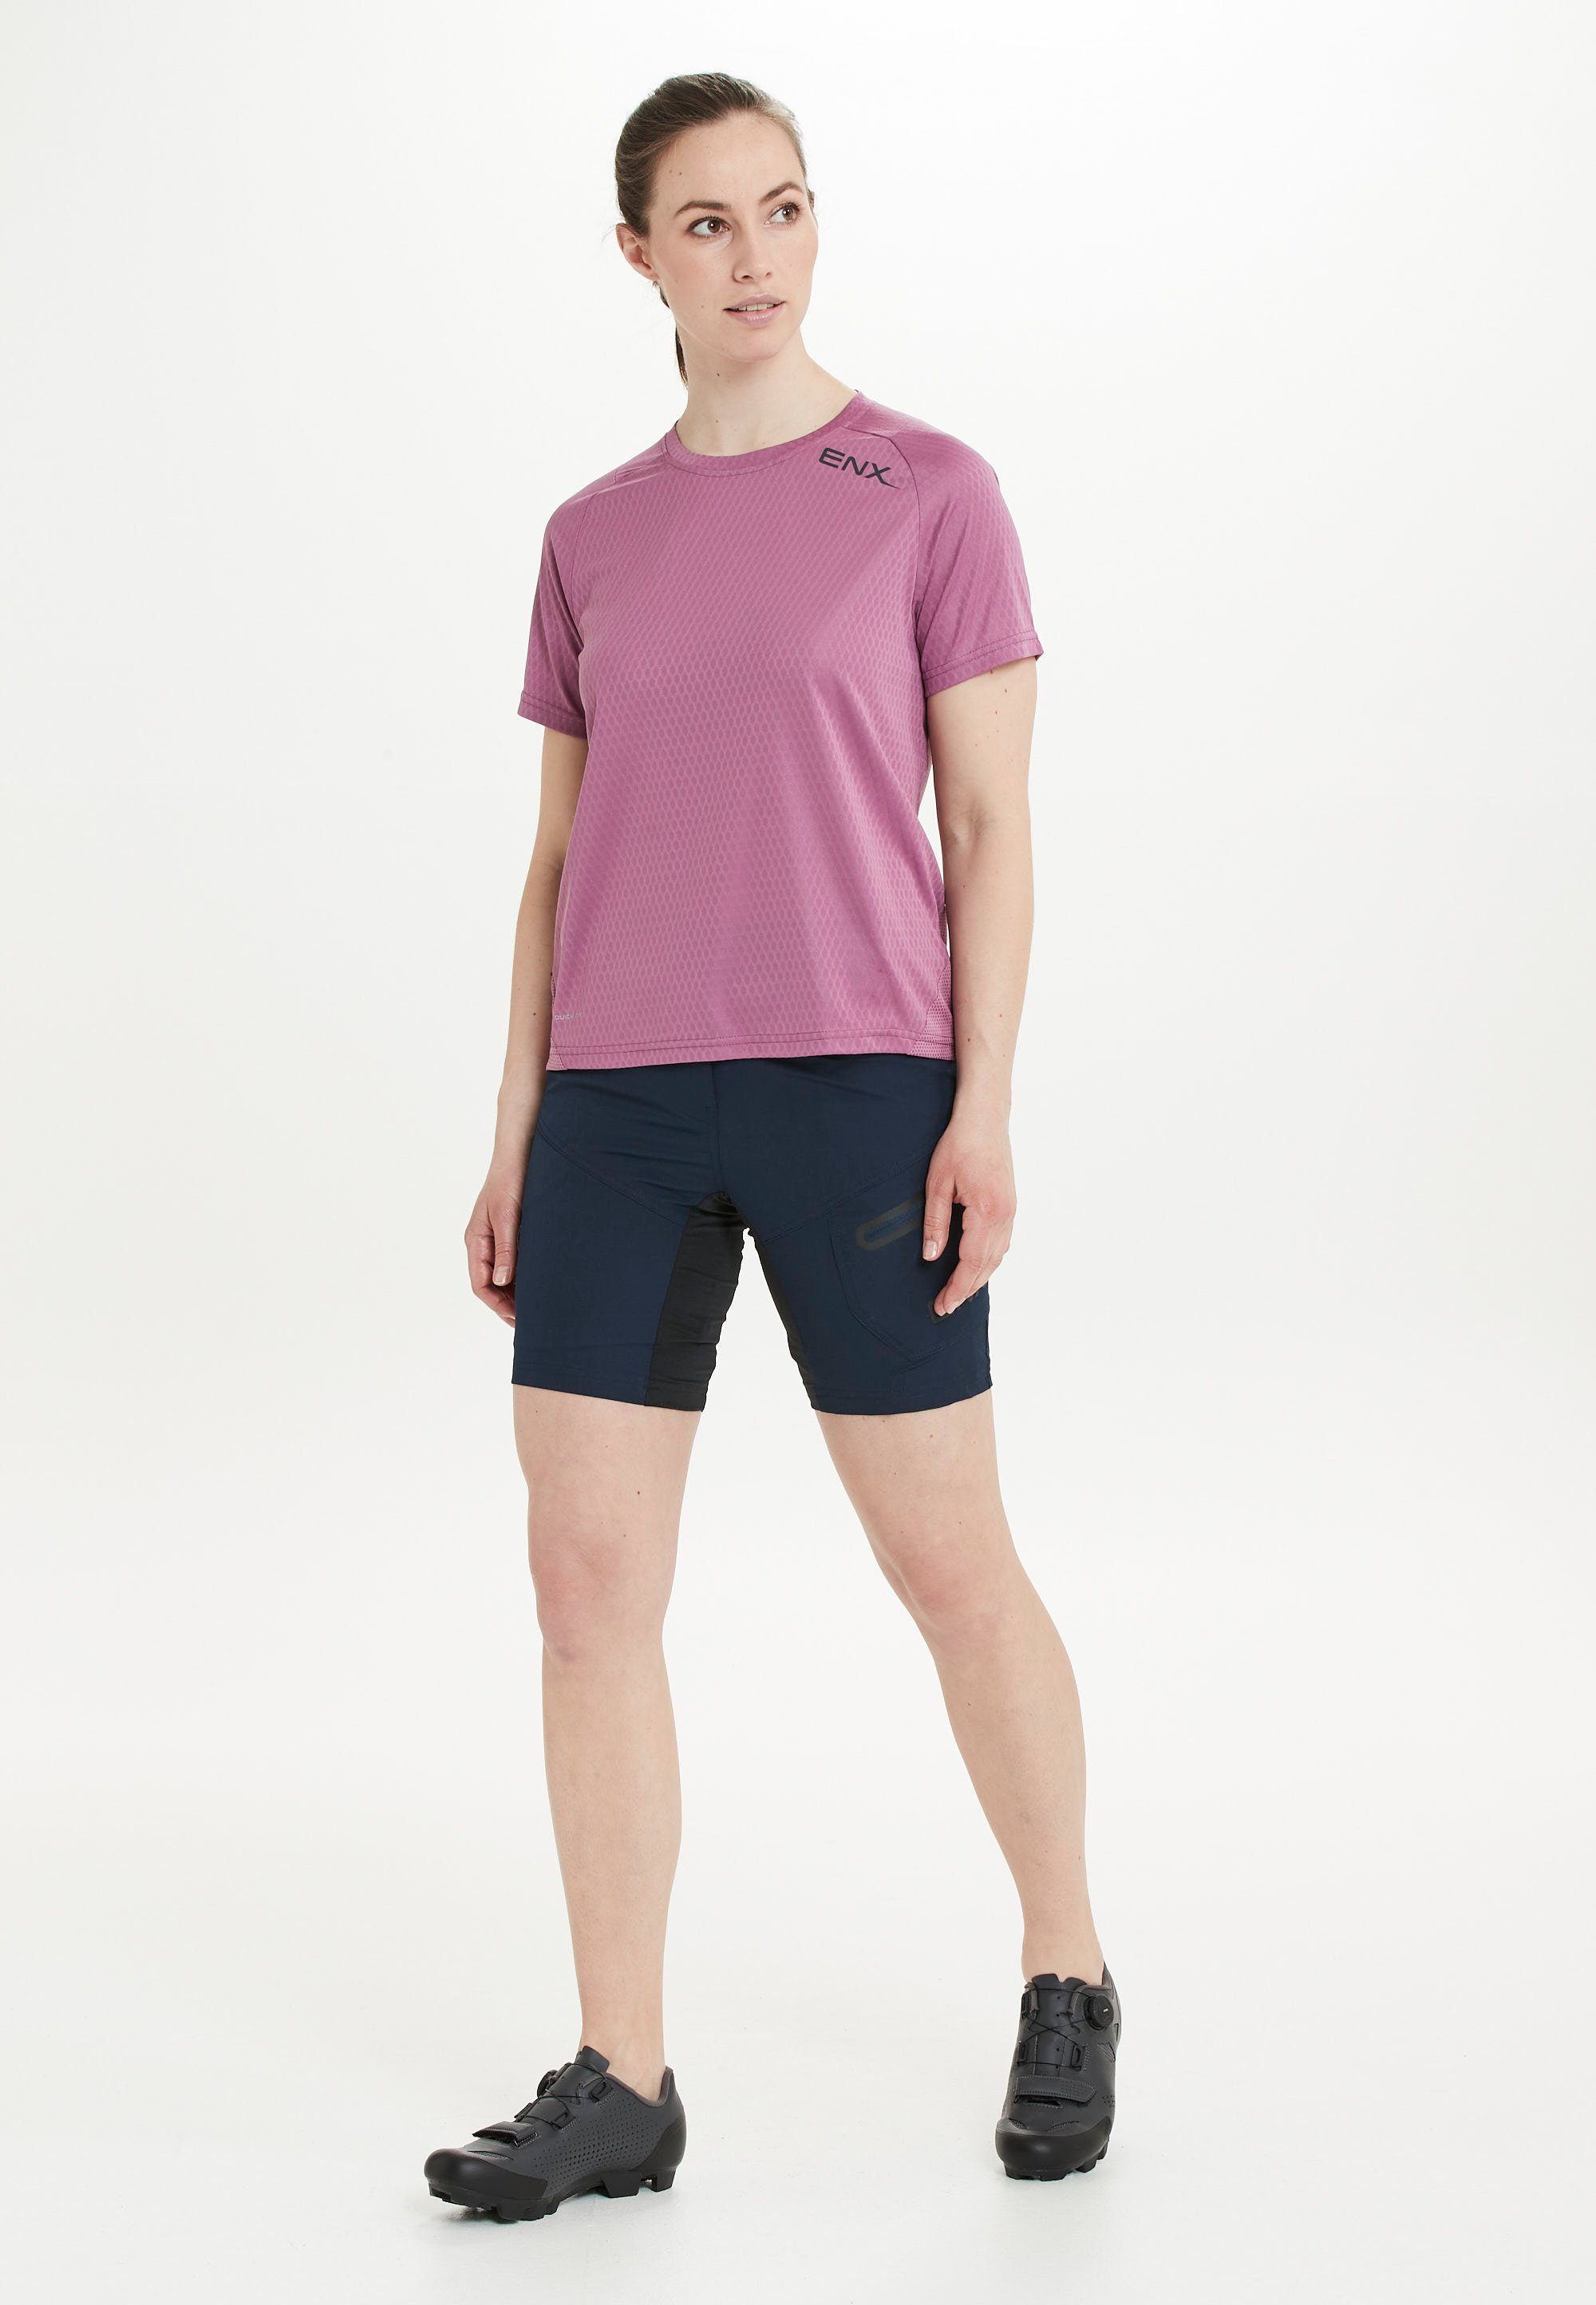 ENDURANCE Radhose Jamilla W 2 herausnehmbarer Shorts in mit 1 Innen-Tights dunkelblau